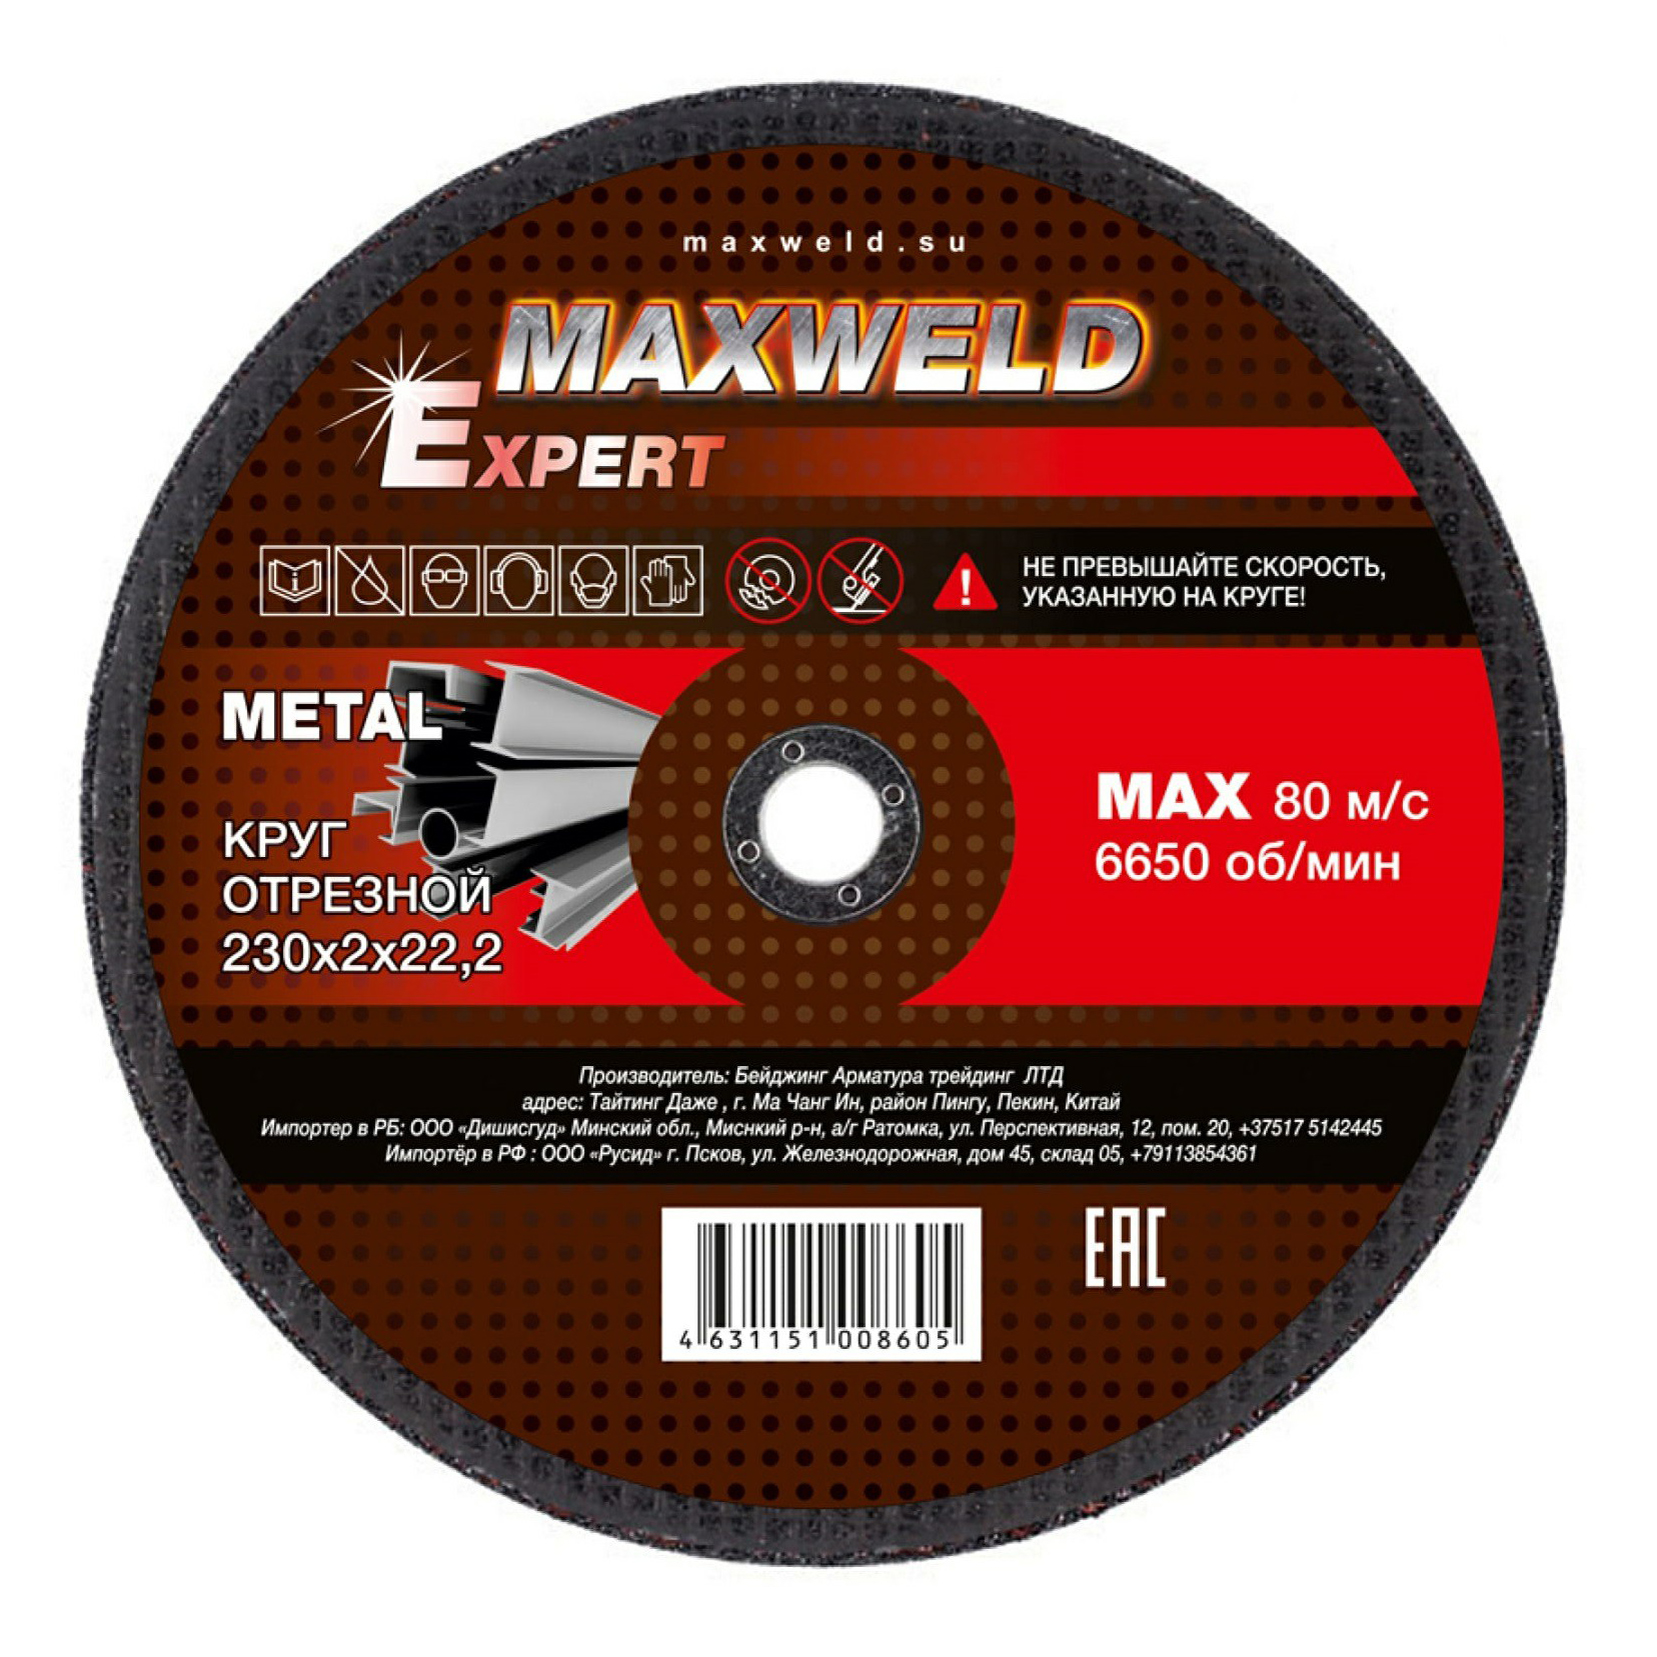 Круг отрезной для металла Maxweld Expert Krex 230 x 2 мм